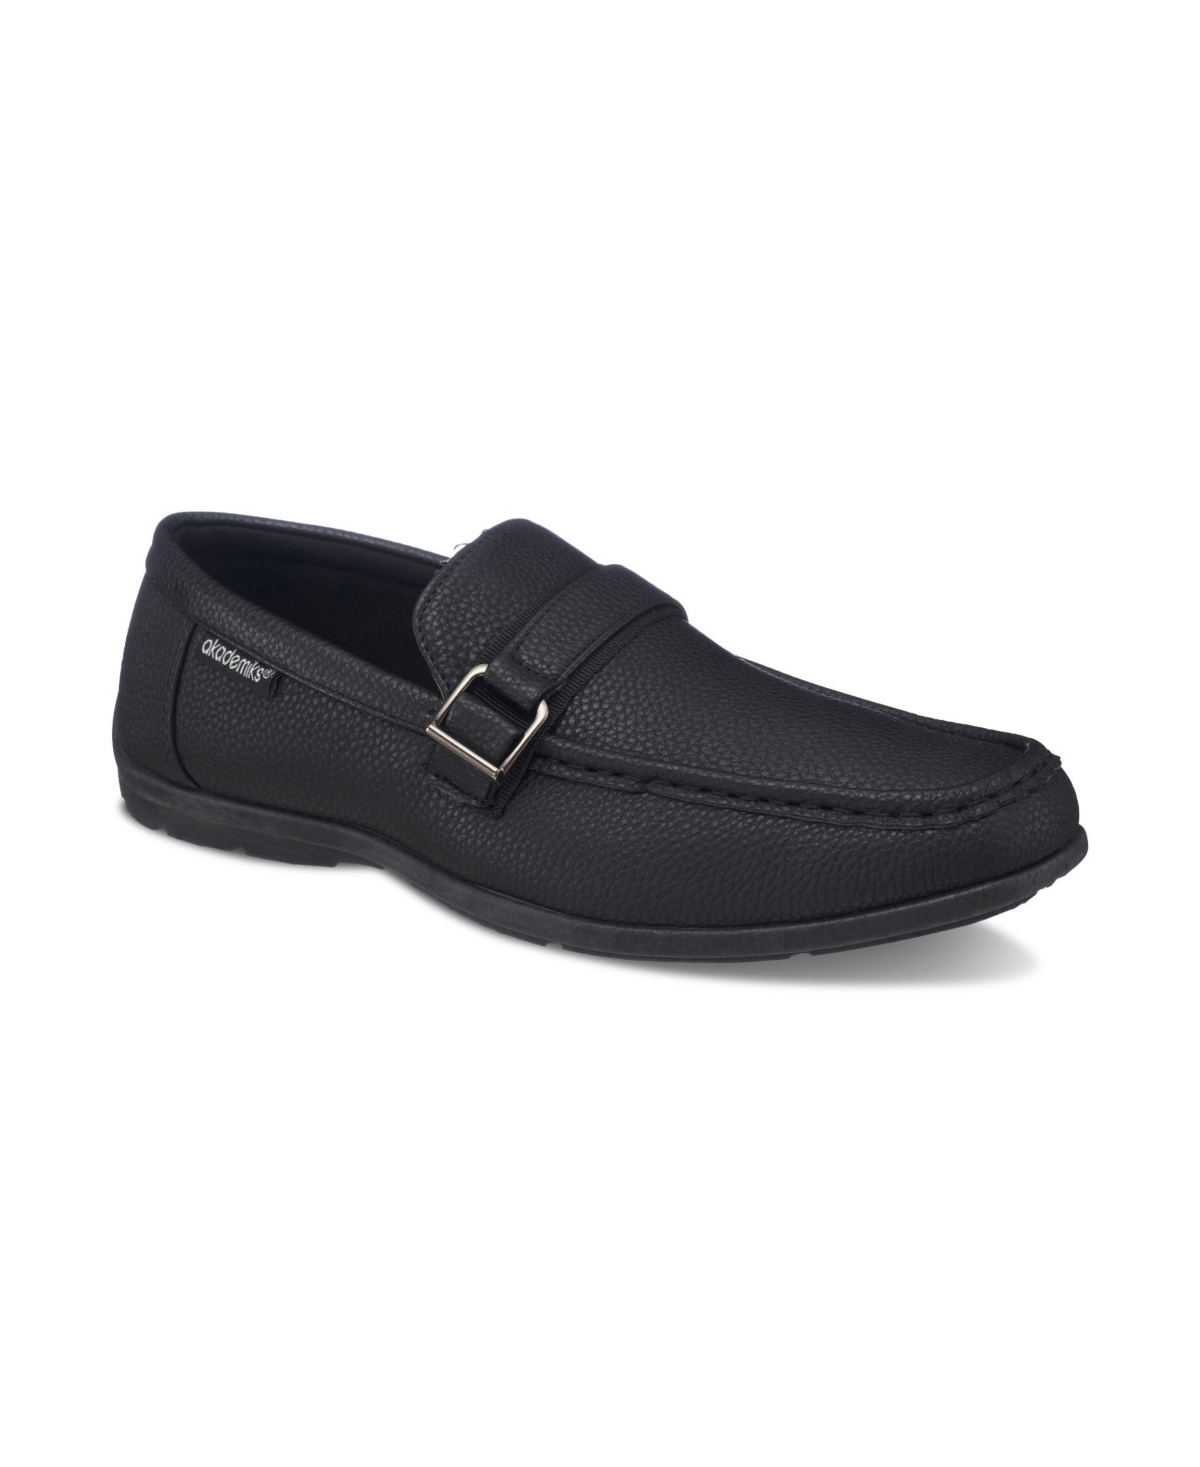 Akademiks Men's Slip-on Moccasin Loafers Men's Shoes In Black